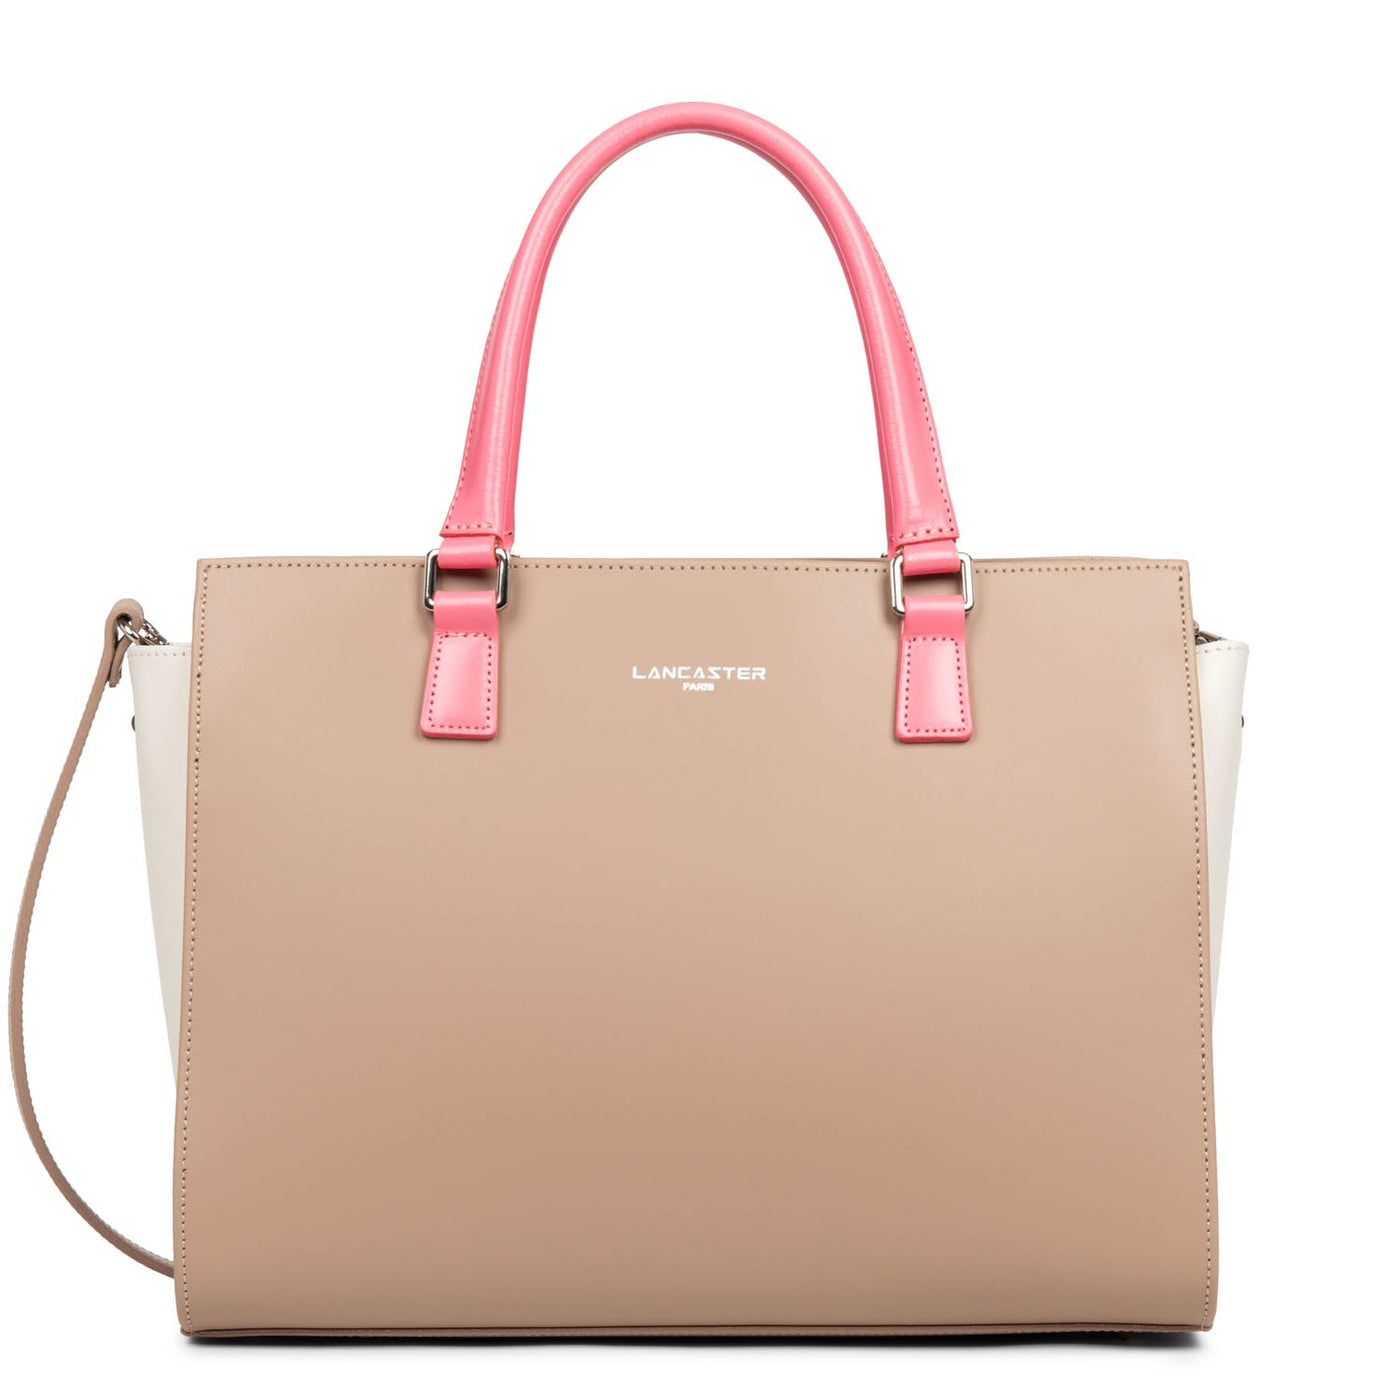 grand sac cabas main - smooth #couleur_nude-ecru-rose-fonc